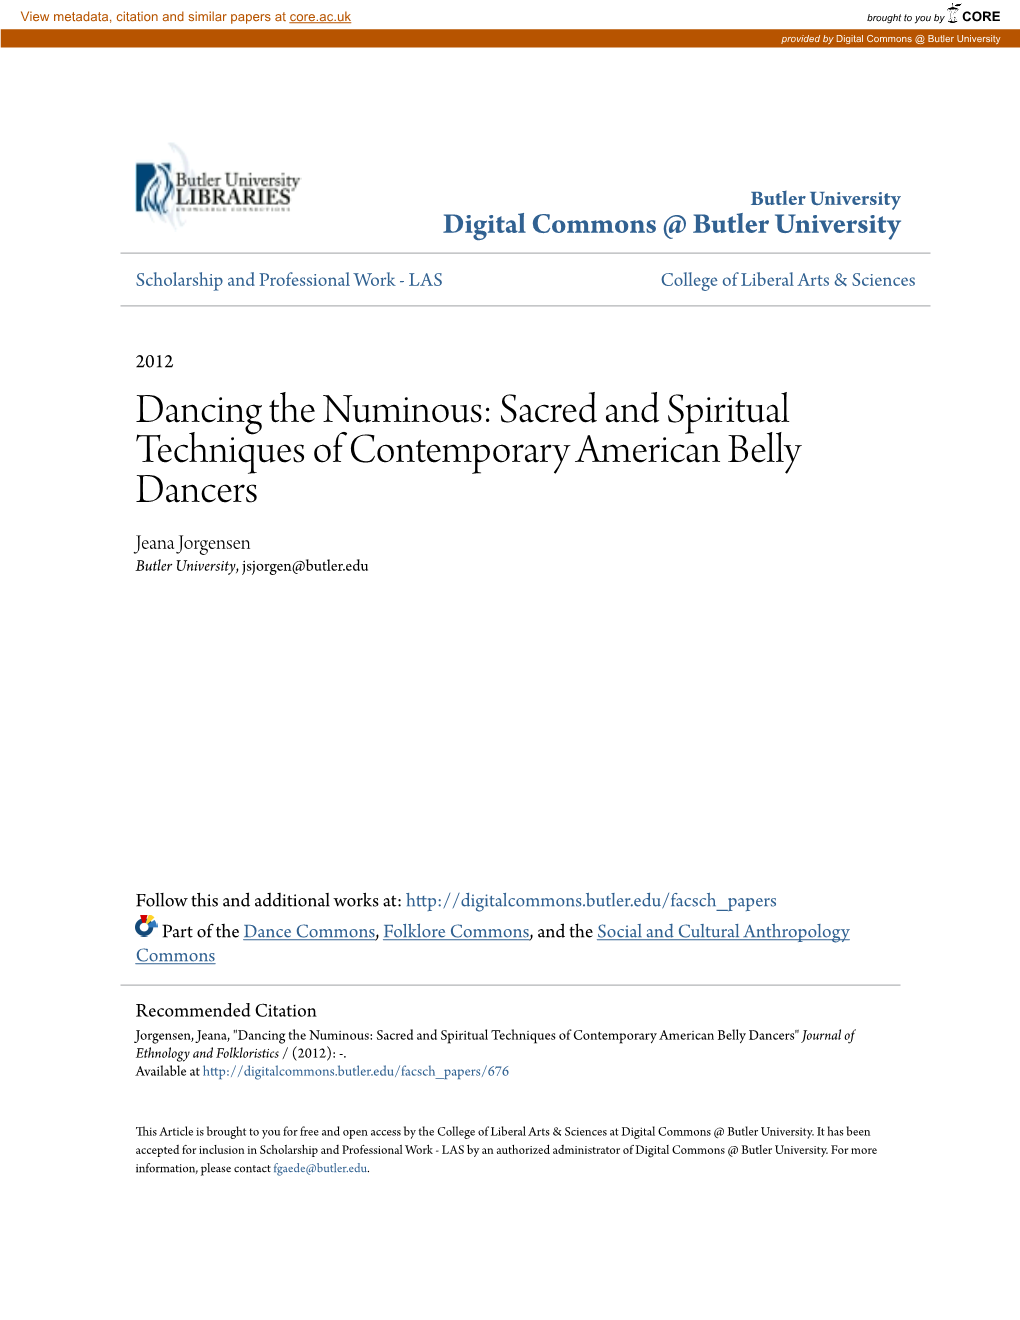 Dancing the Numinous: Sacred and Spiritual Techniques of Contemporary American Belly Dancers Jeana Jorgensen Butler University, Jsjorgen@Butler.Edu